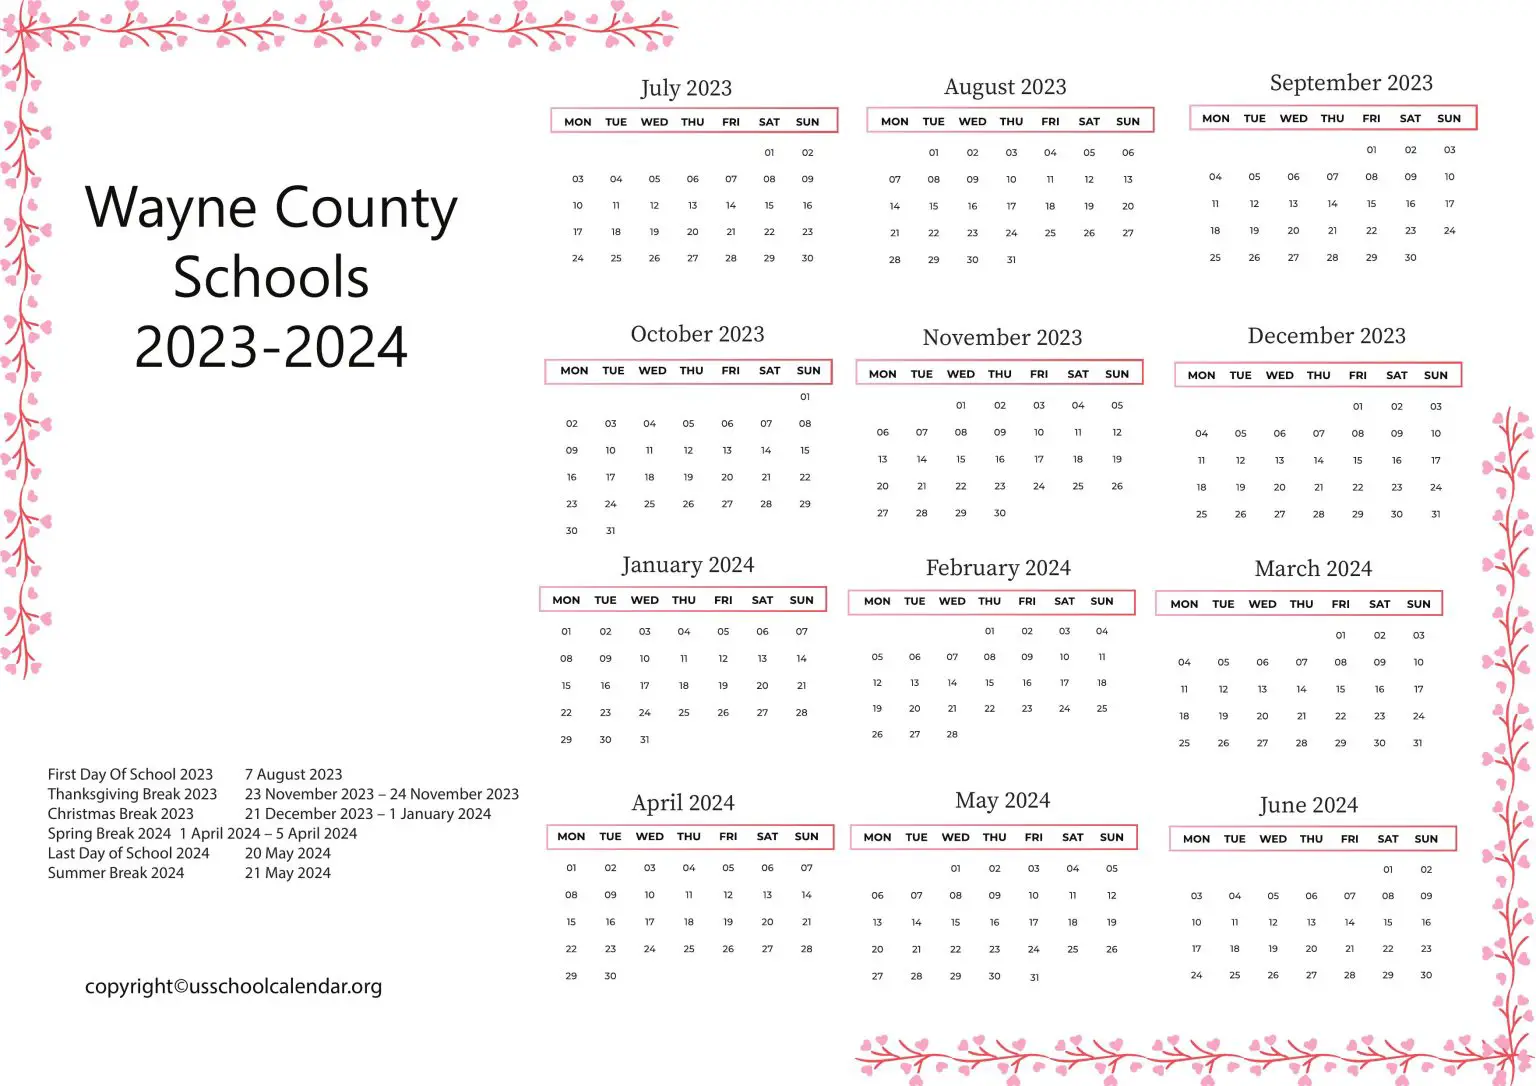 Wayne County Schools Calendar with Holidays 2023 2024